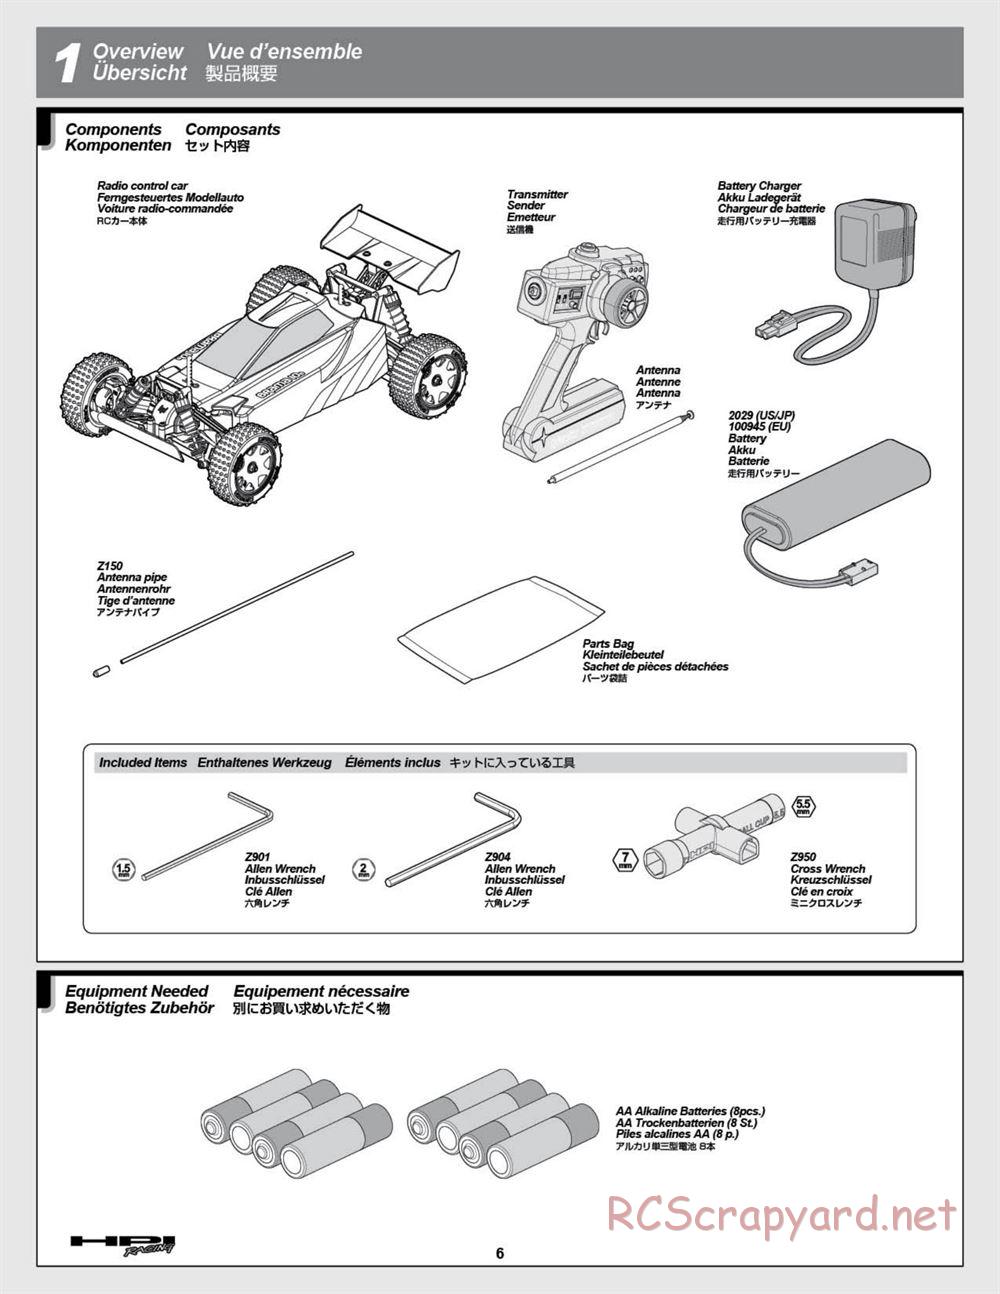 HPI - Brama 10B - Manual - Page 6